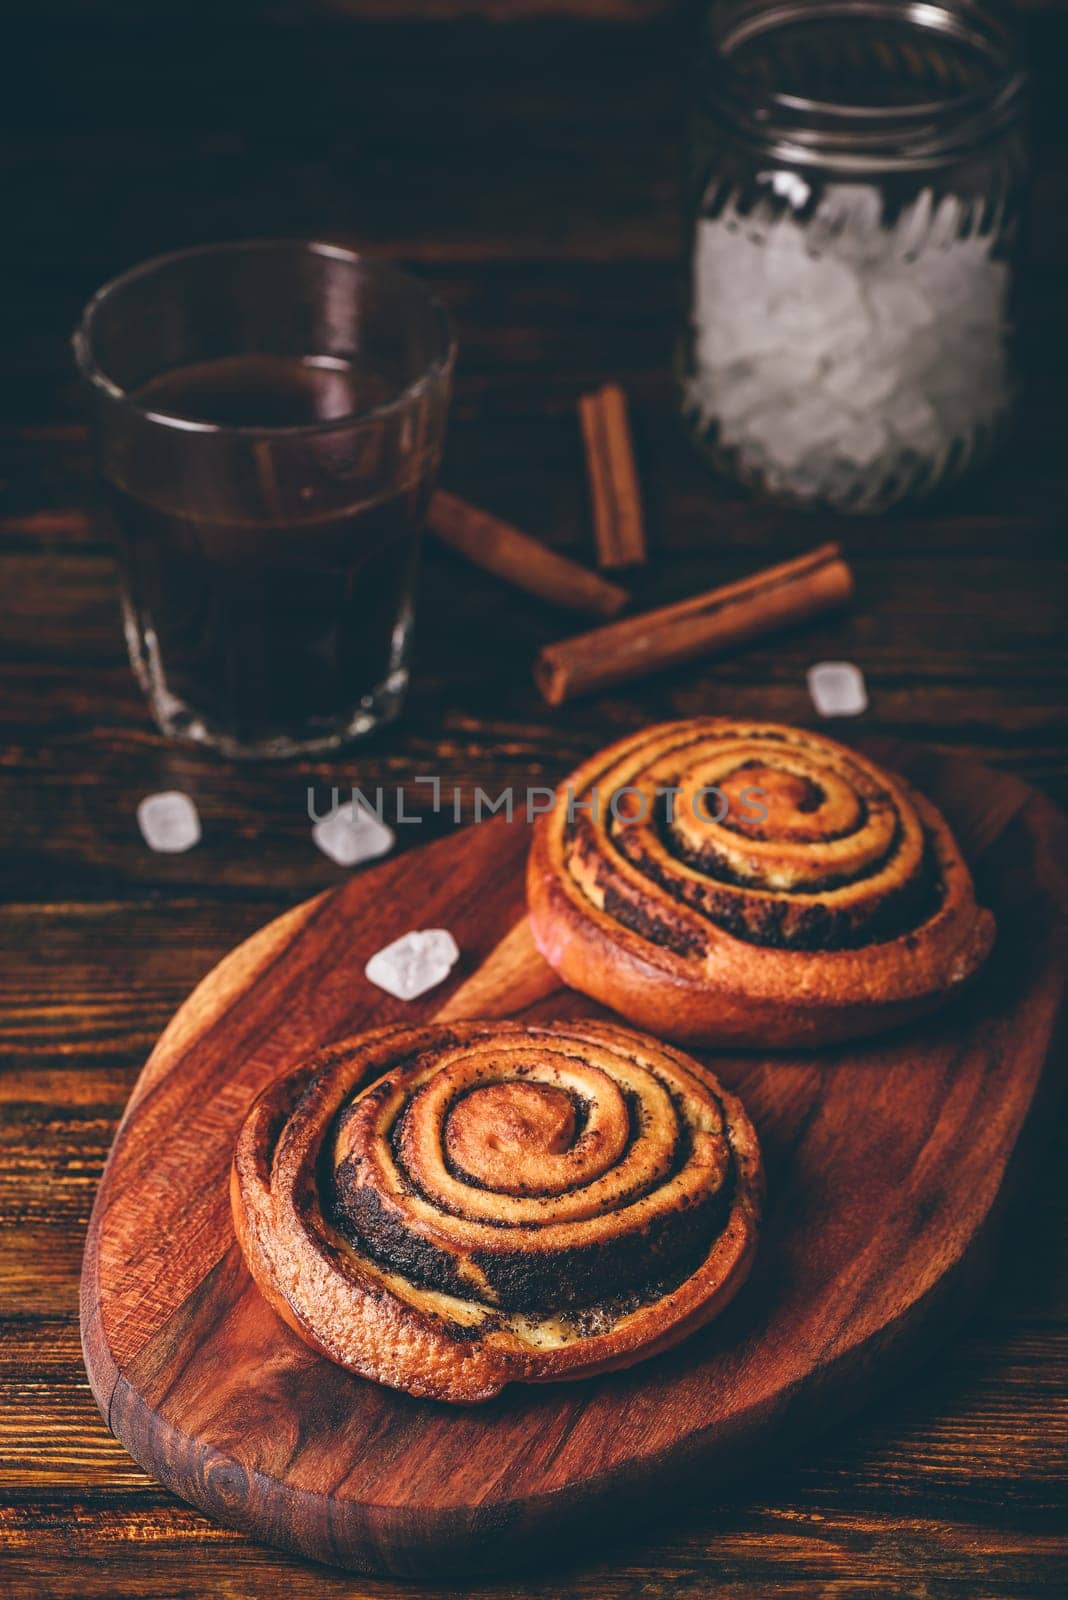 Sweet roll with poppy seeds by Seva_blsv